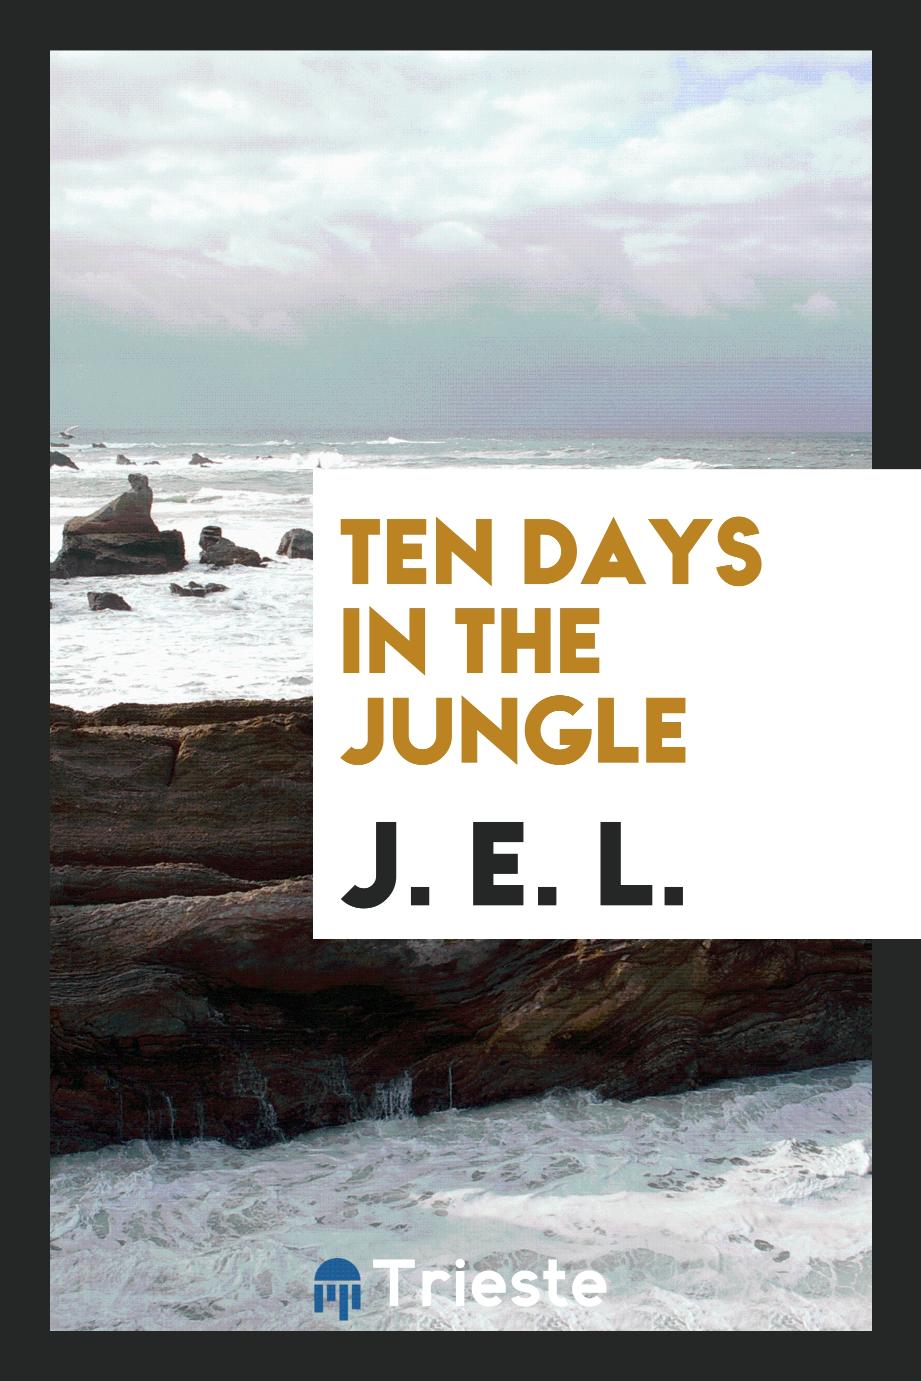 Ten days in the jungle